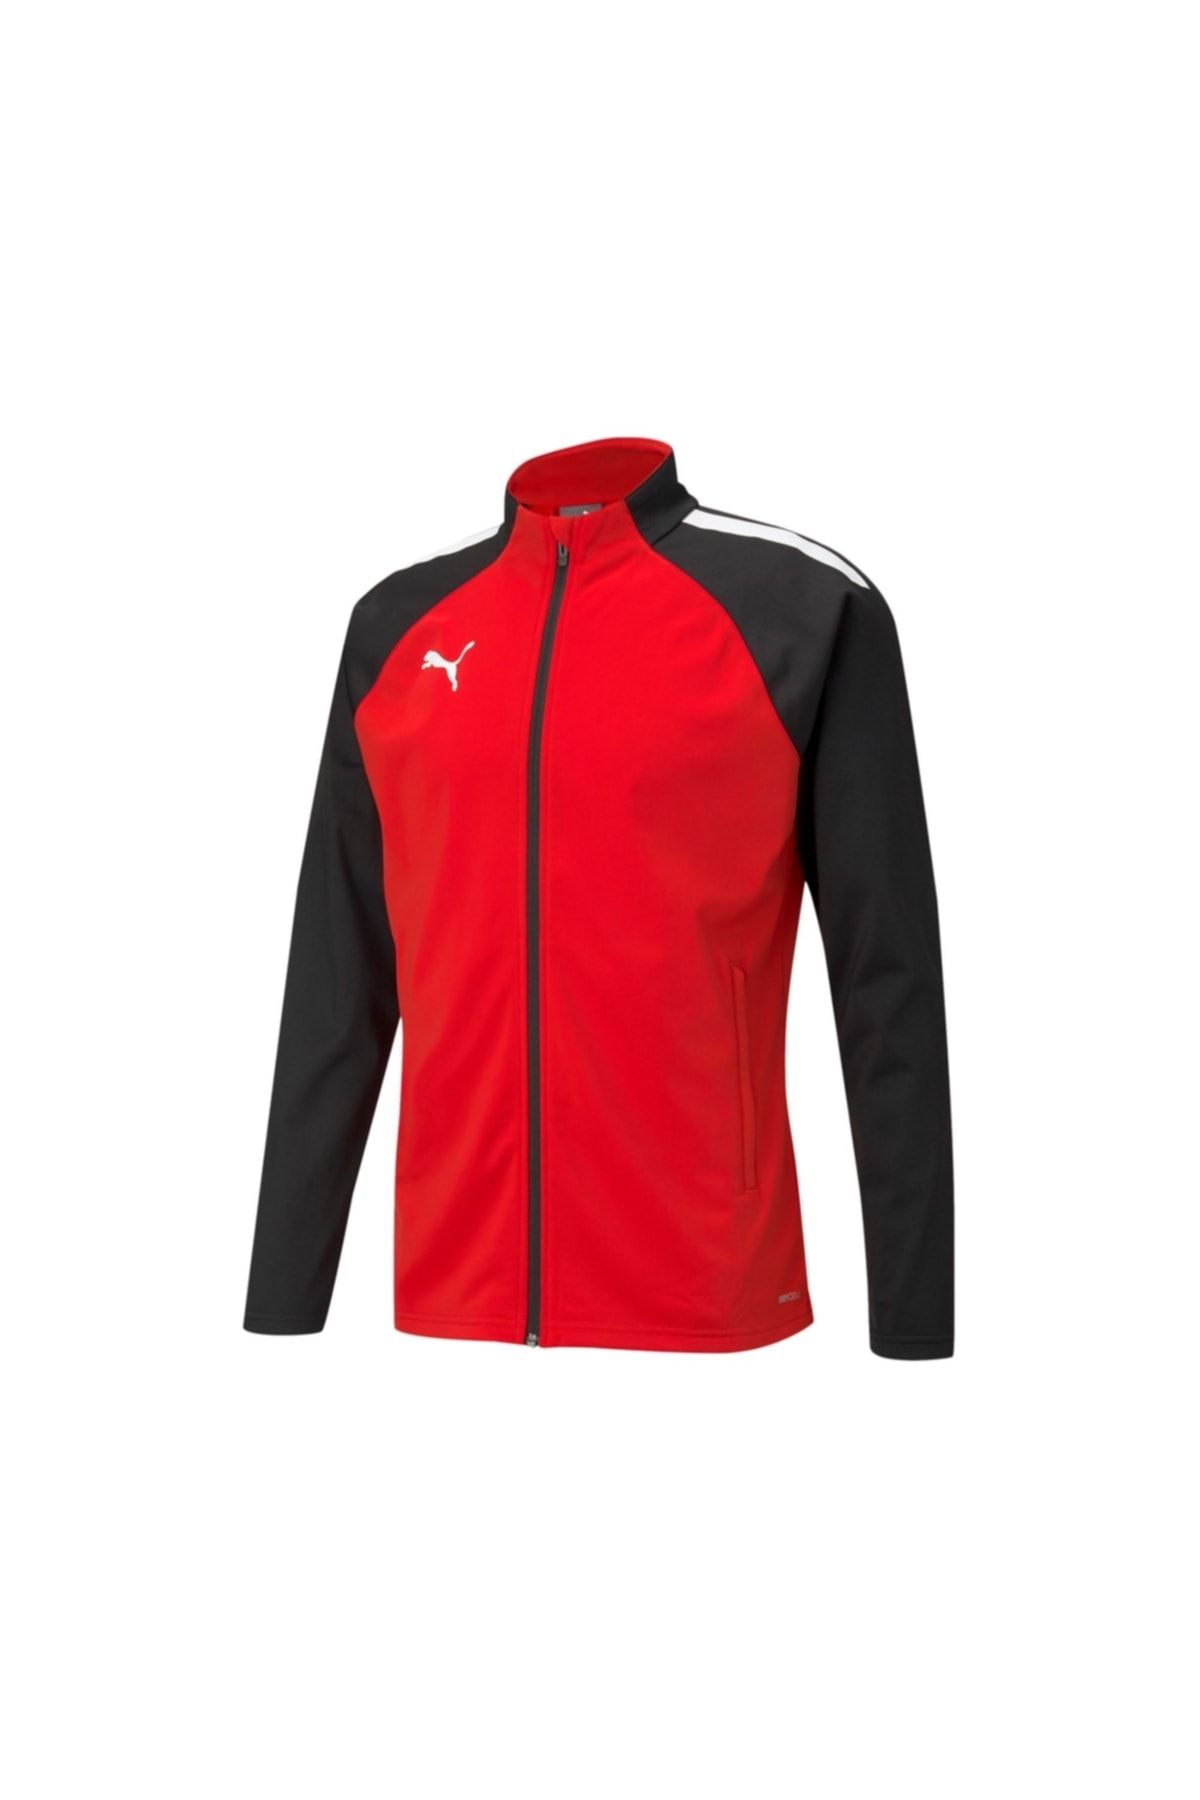 Puma Teamliga Training Jacket Erkek Futbol Antrenman Ceketi 65723401 Kırmızı